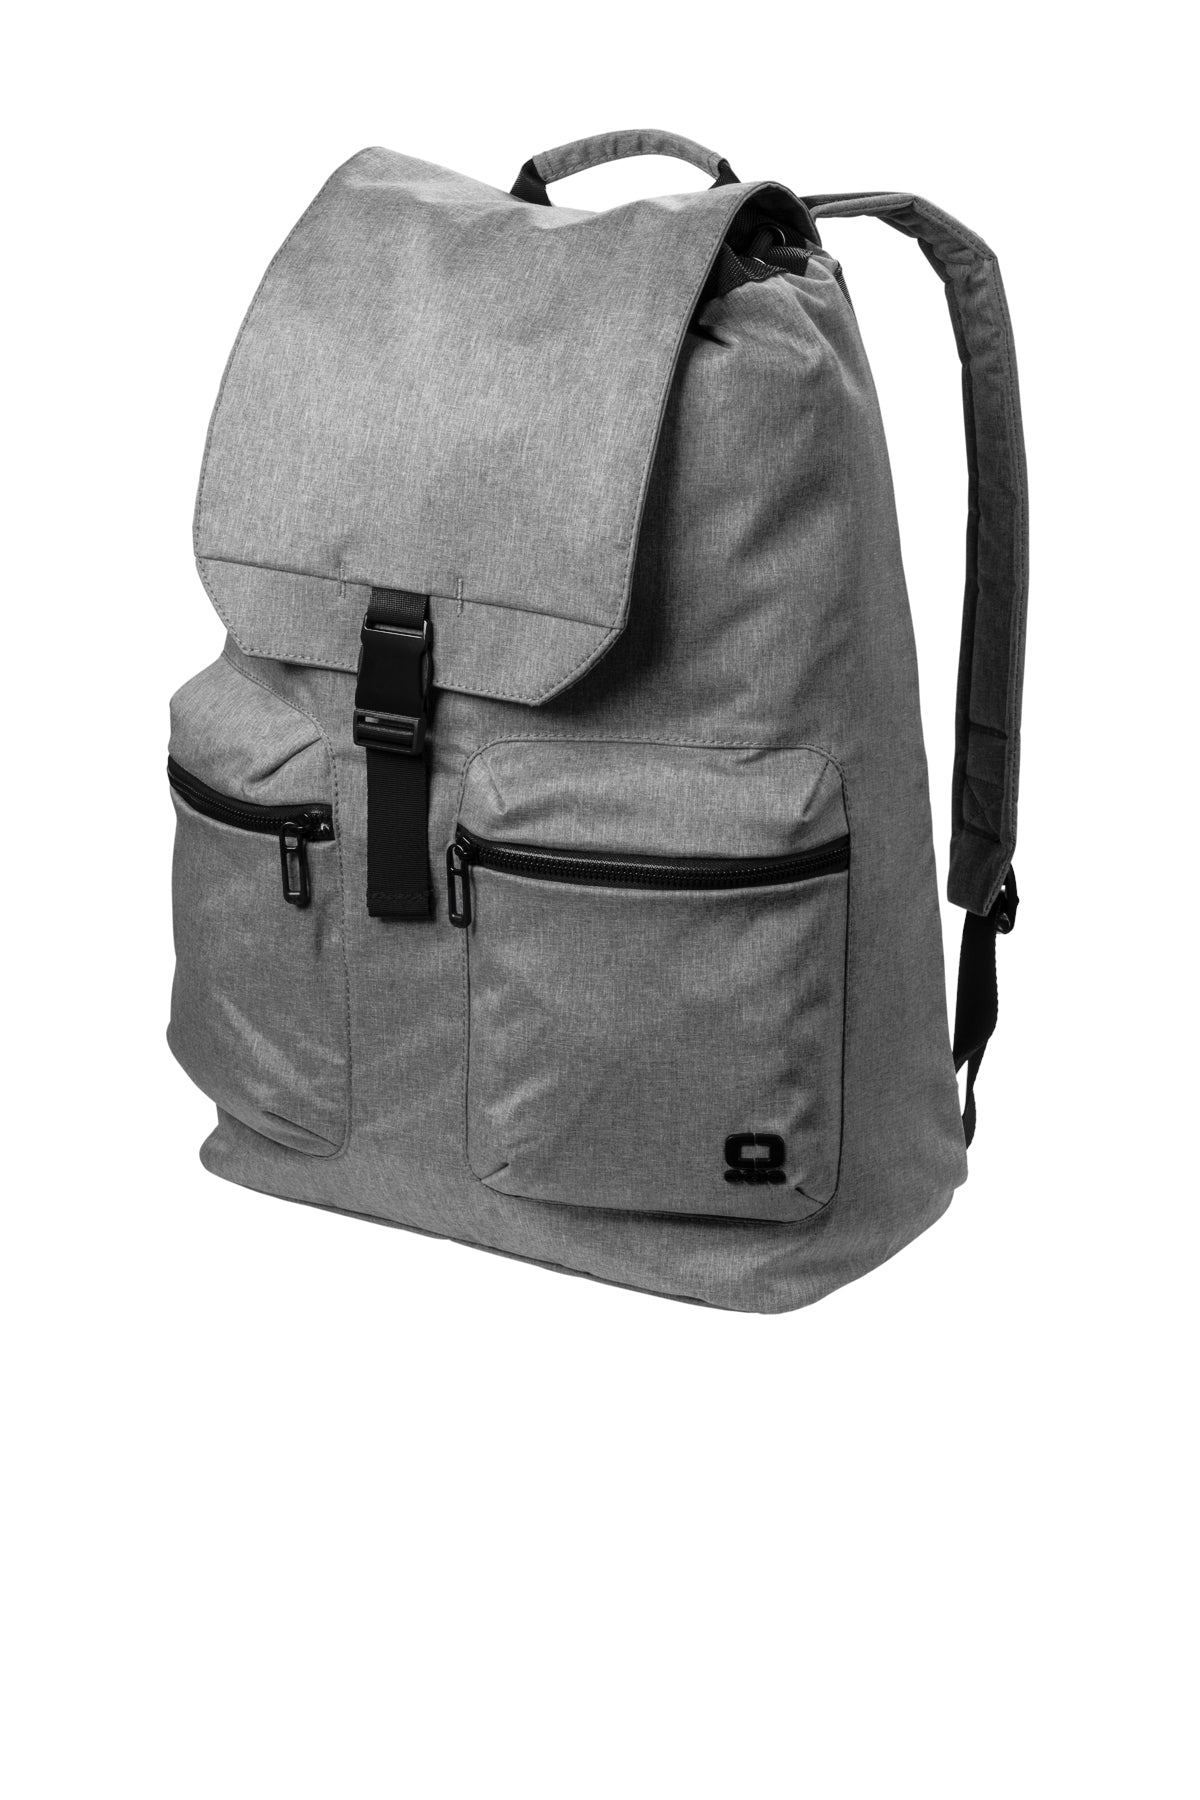 OGIO Evolution Customzied Backpacks, Heather Grey